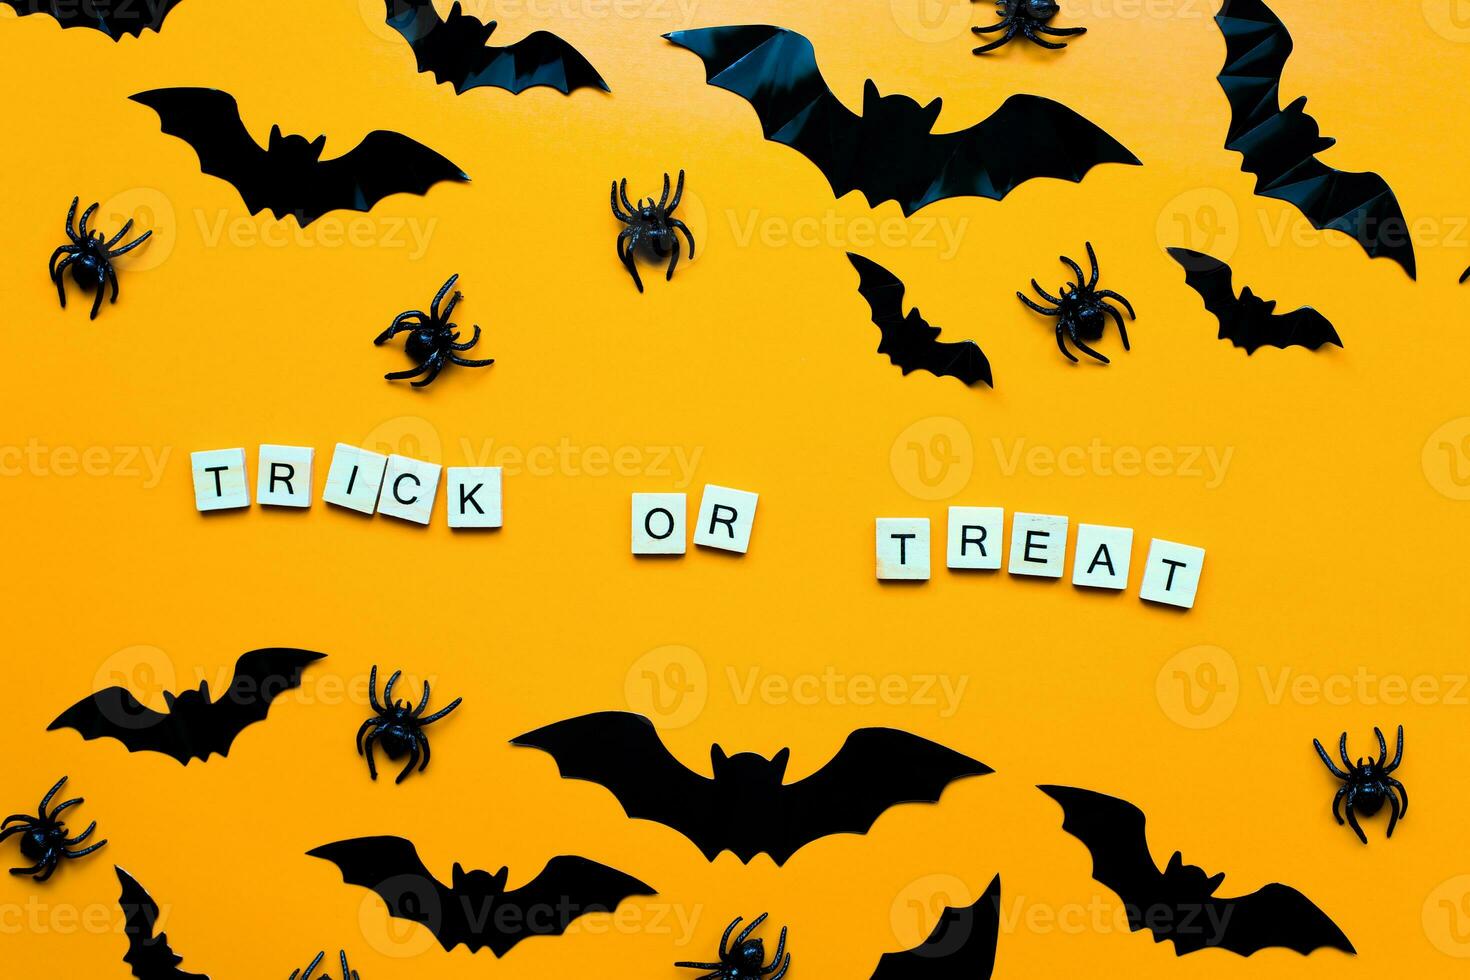 Trick or treat inscription. Flat lay halloween. The bats photo